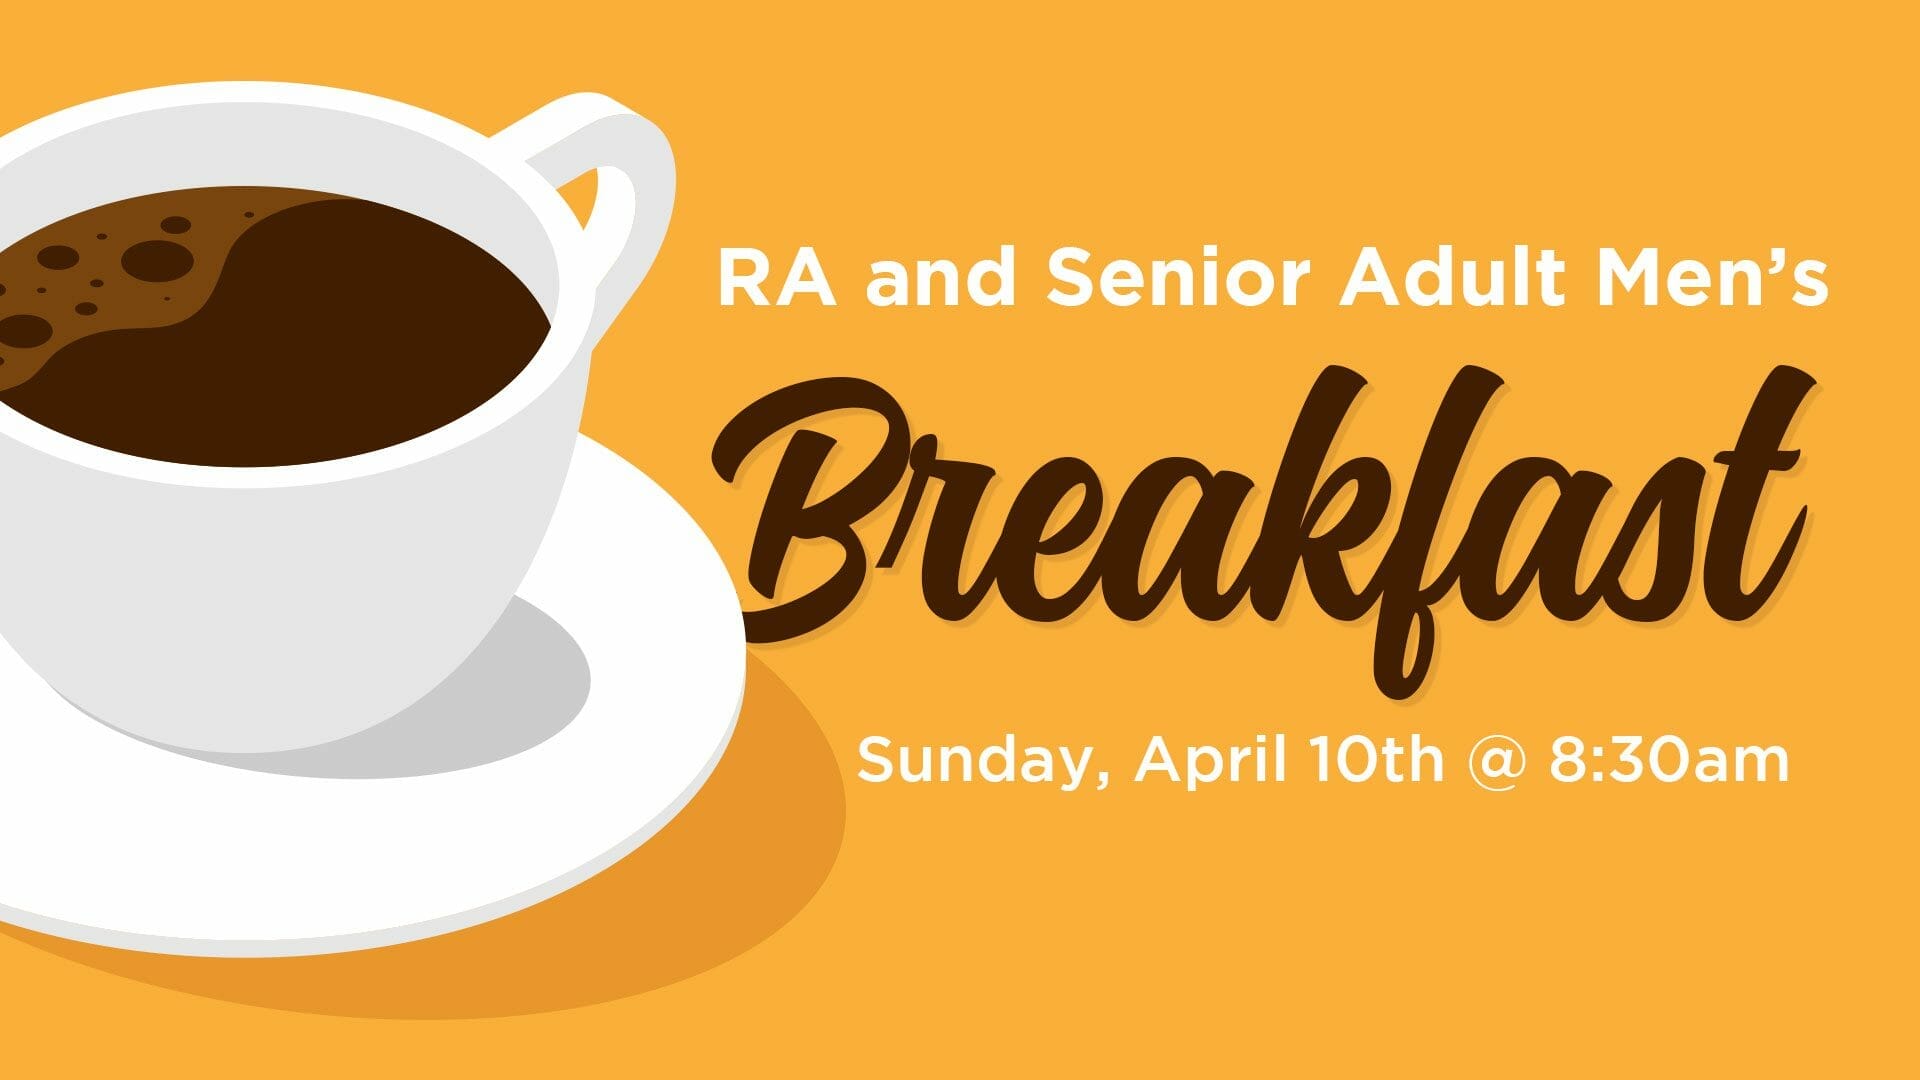 RA and Senior Adult Men’s Breakfast